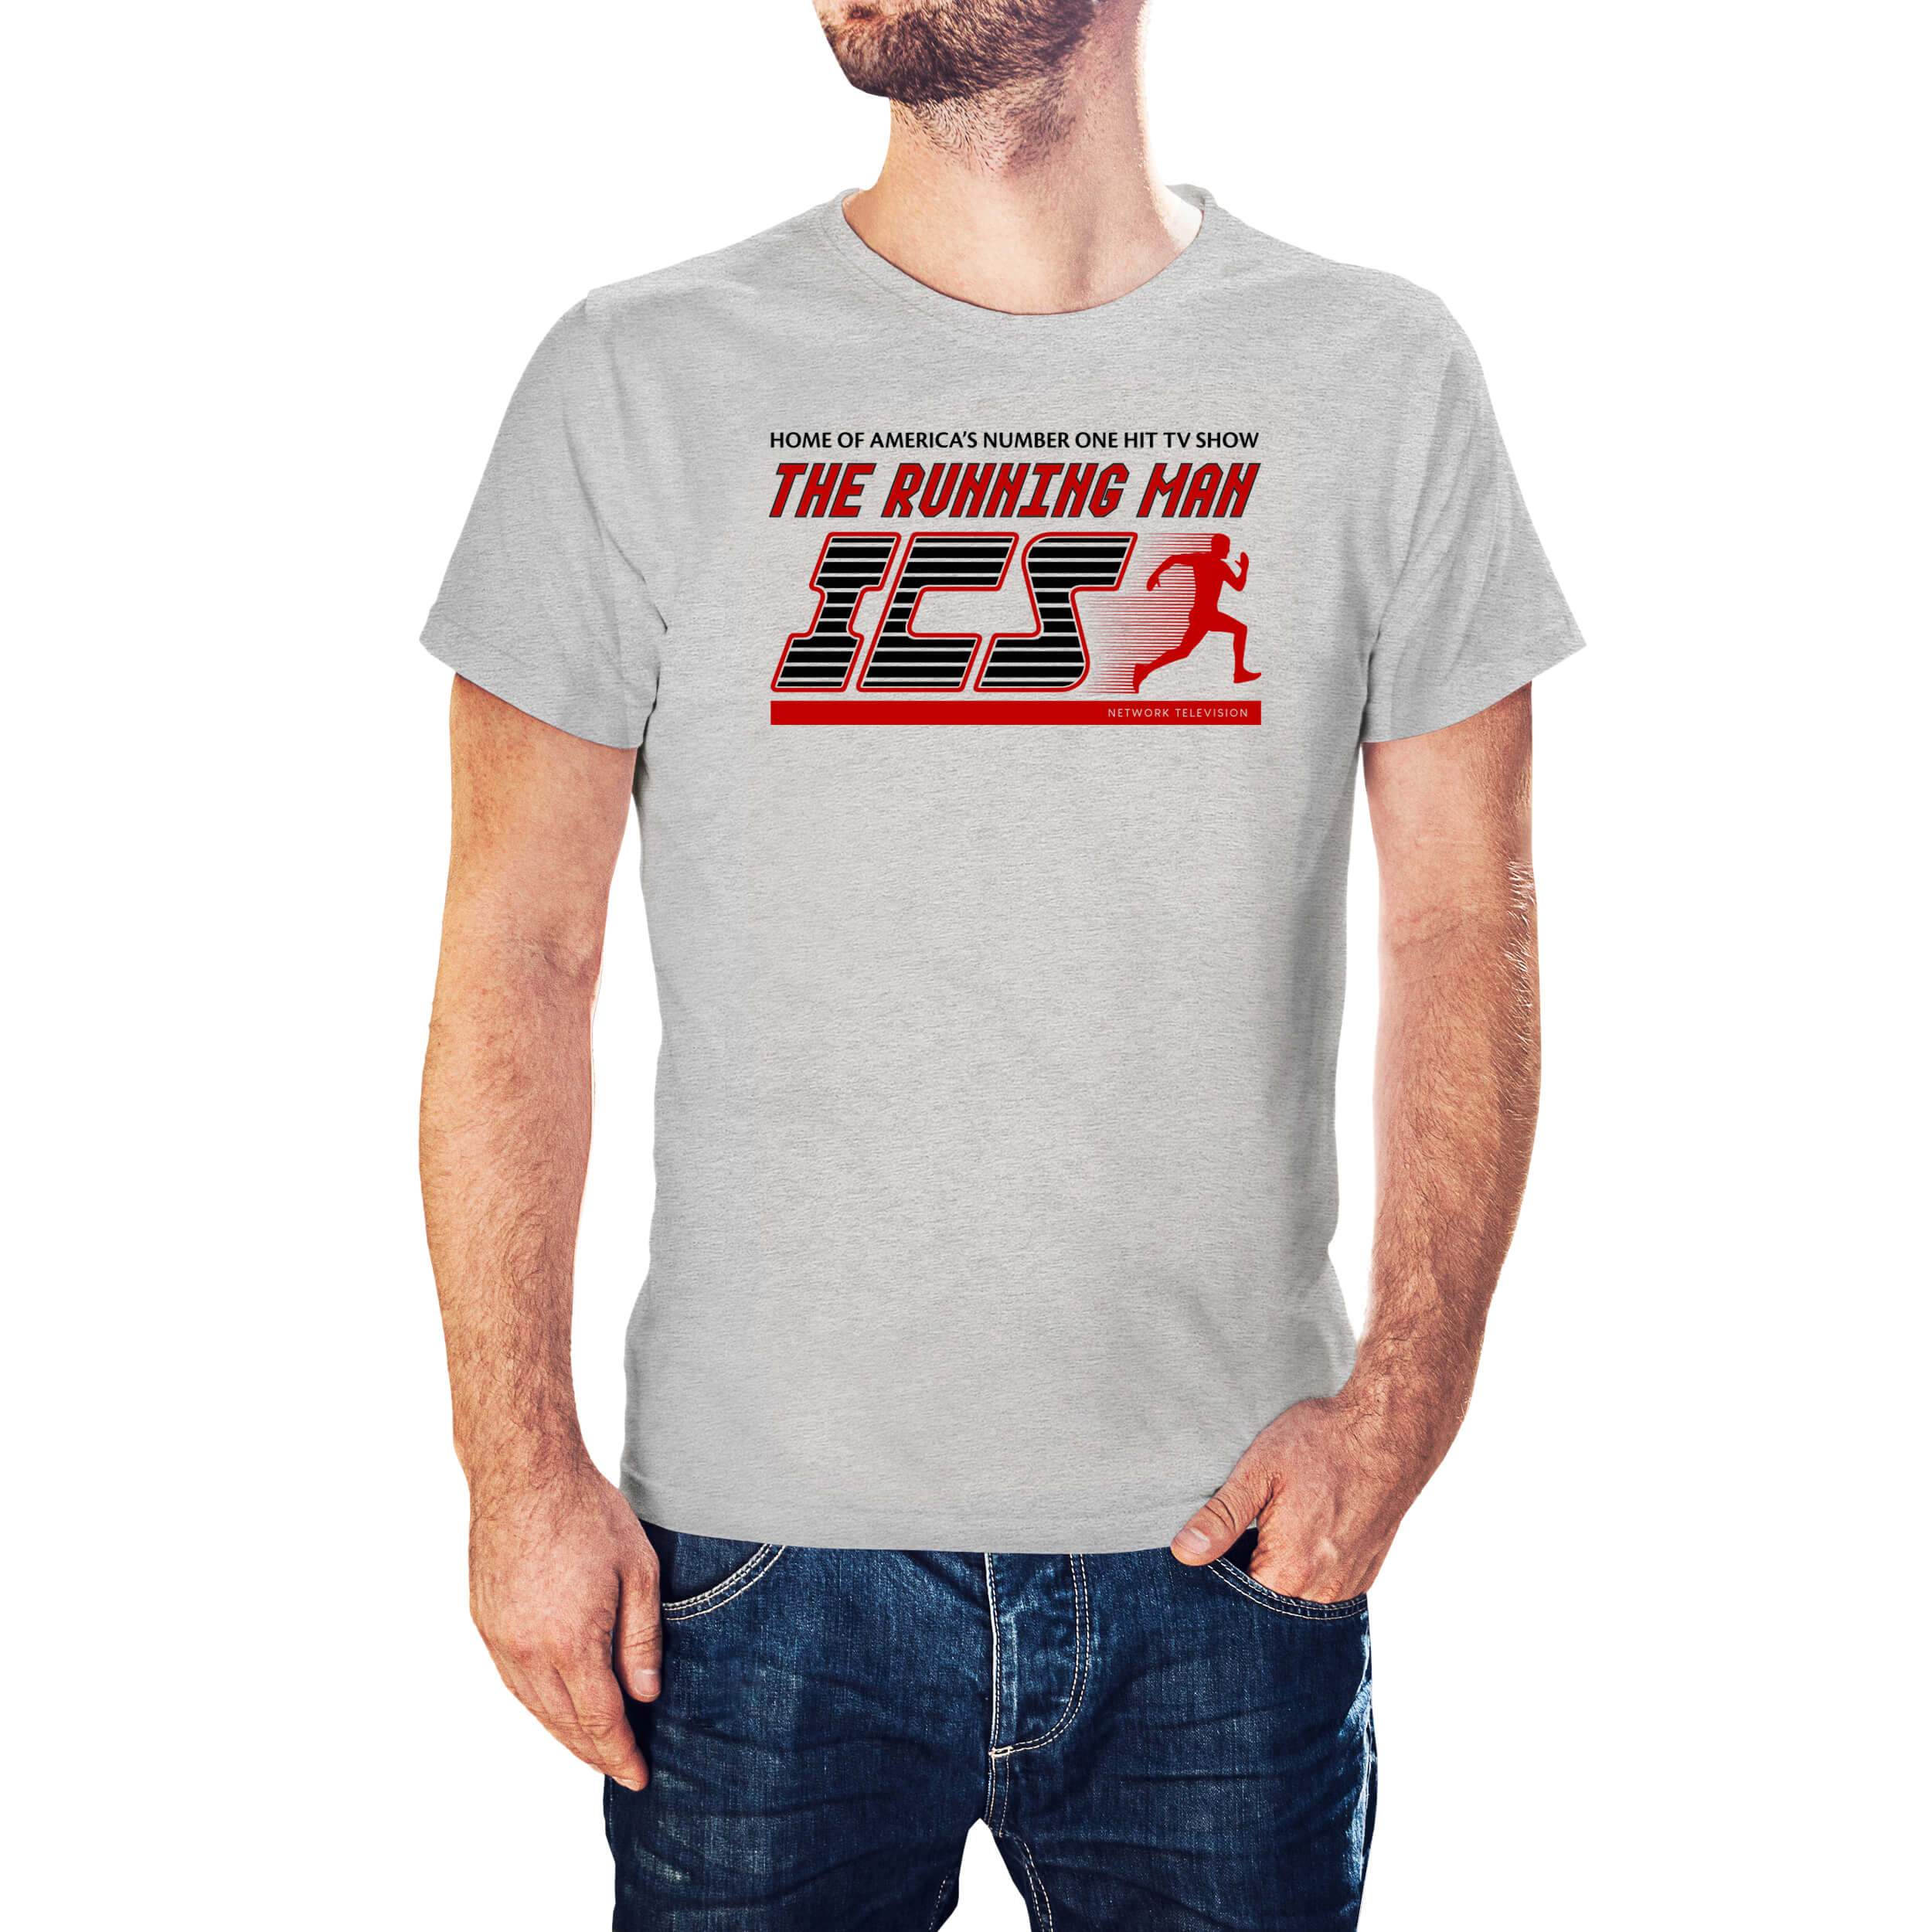 The Running Man inpsired ICS Logo T-Shirt - Postees